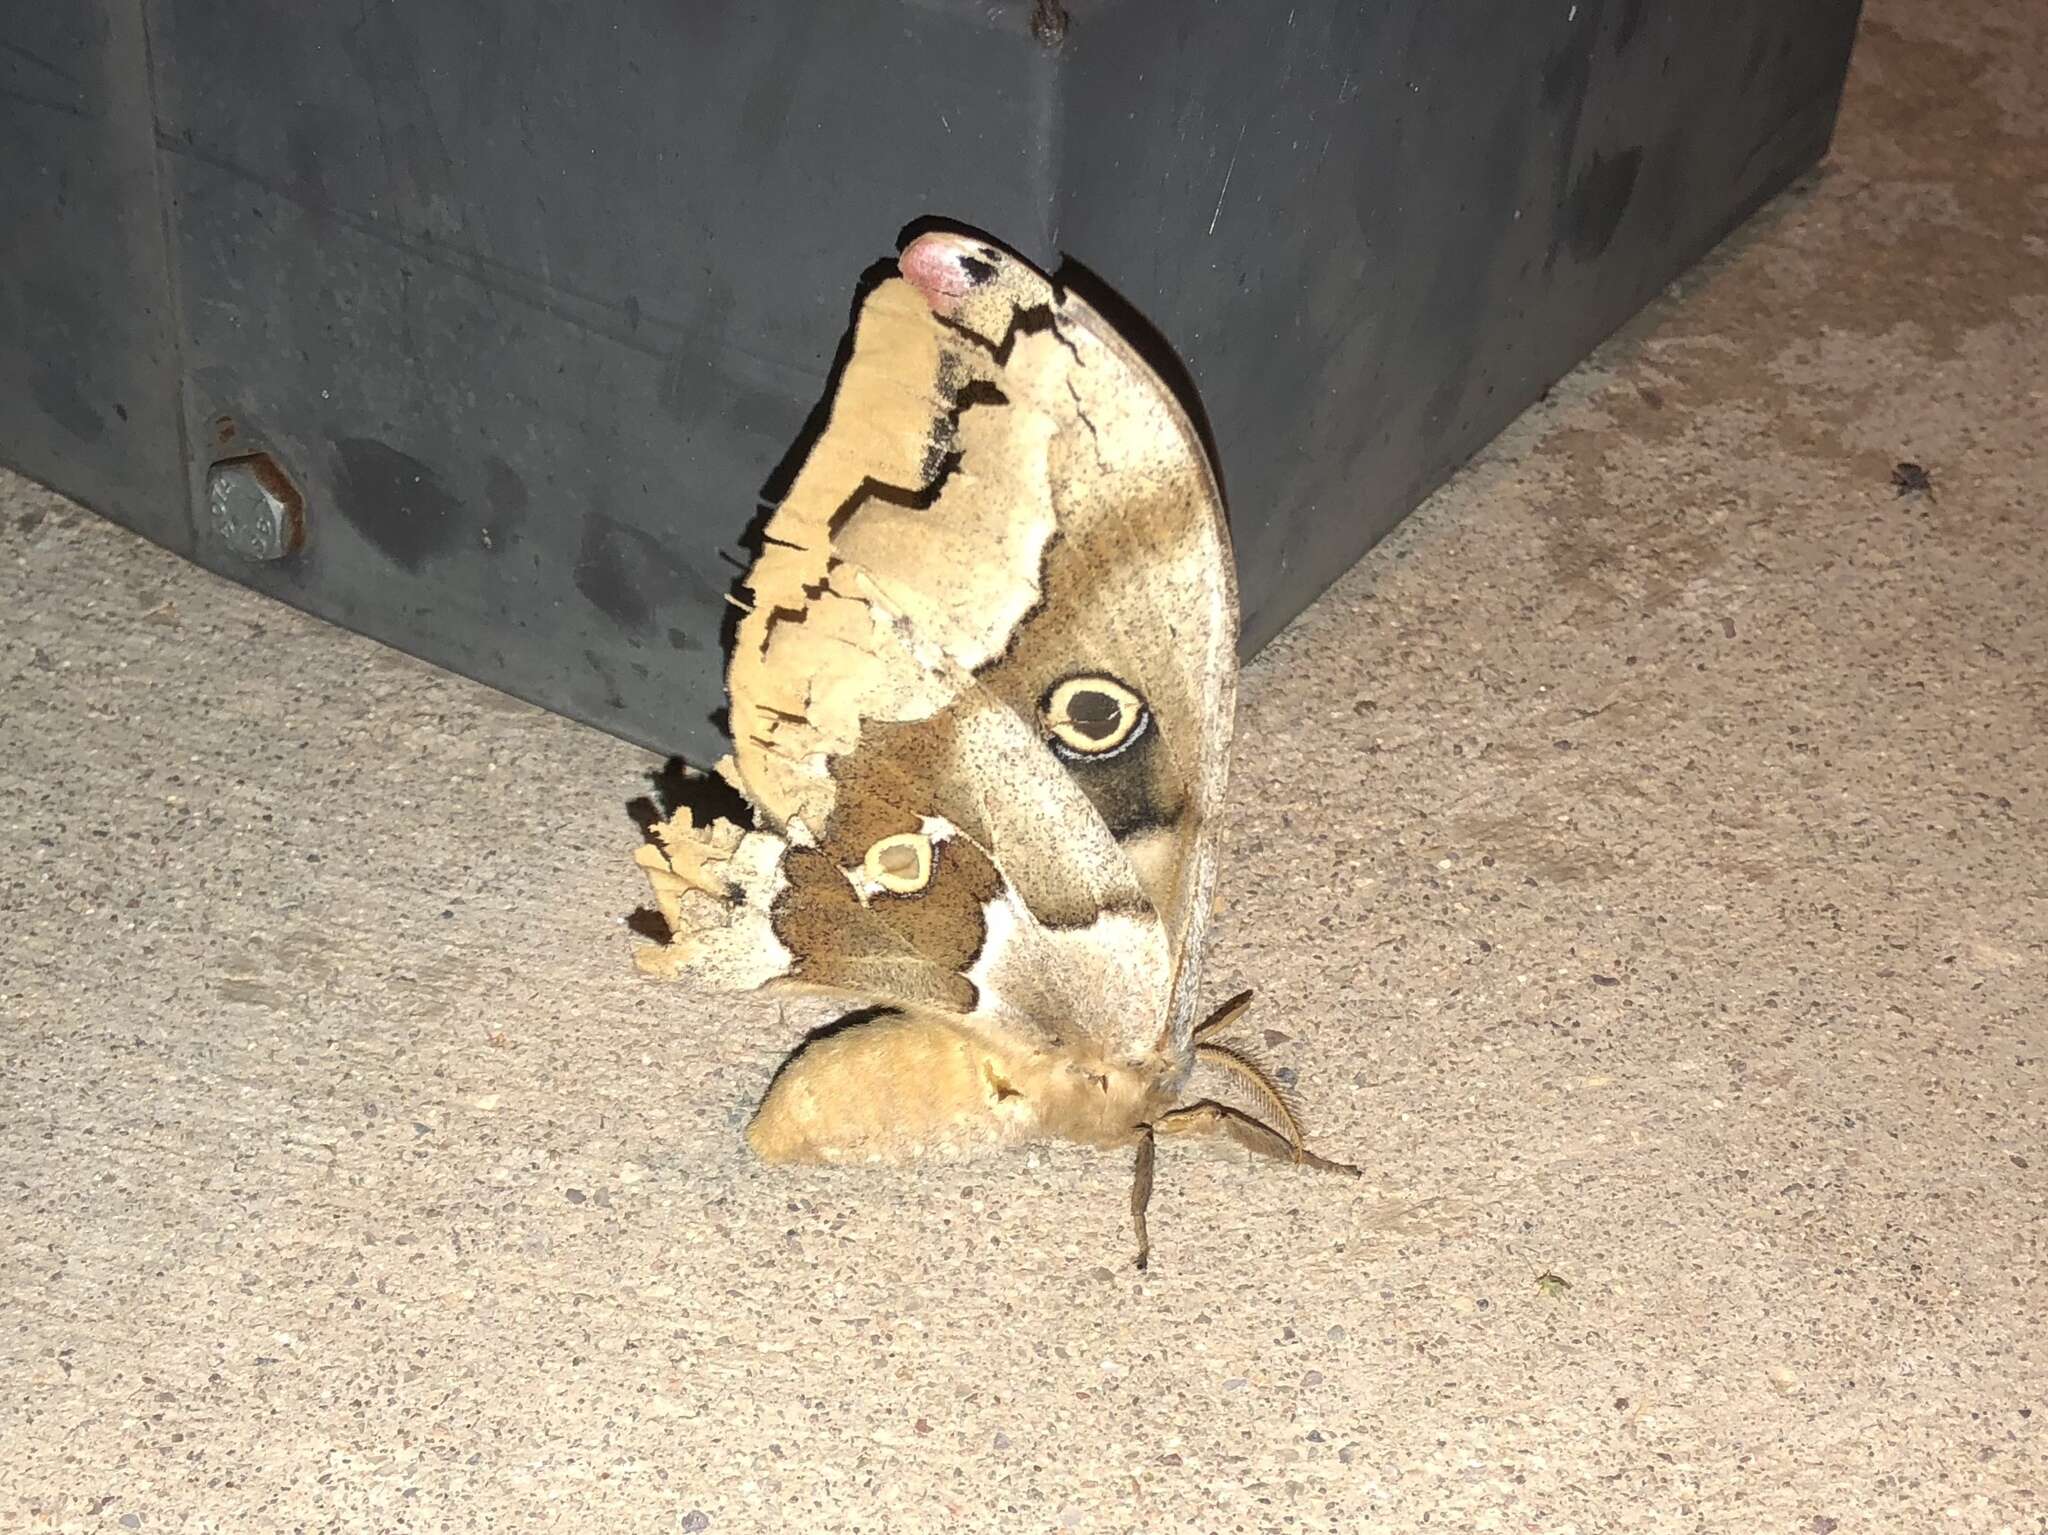 Image of Western Polyphemus Moth